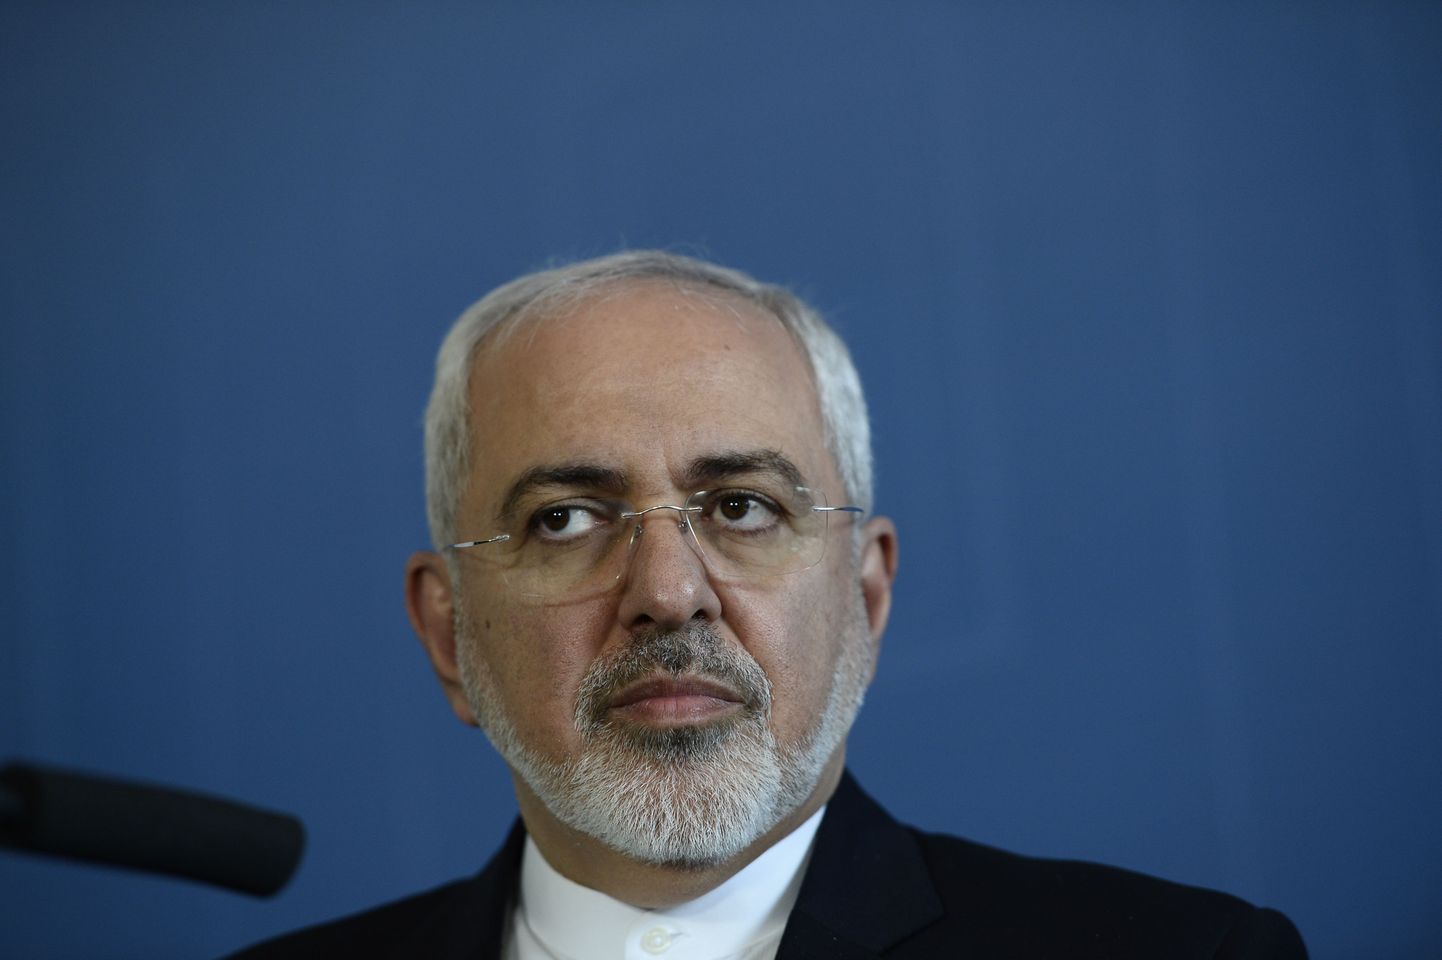 Iraani välisminister Mohammad Javad Zarif